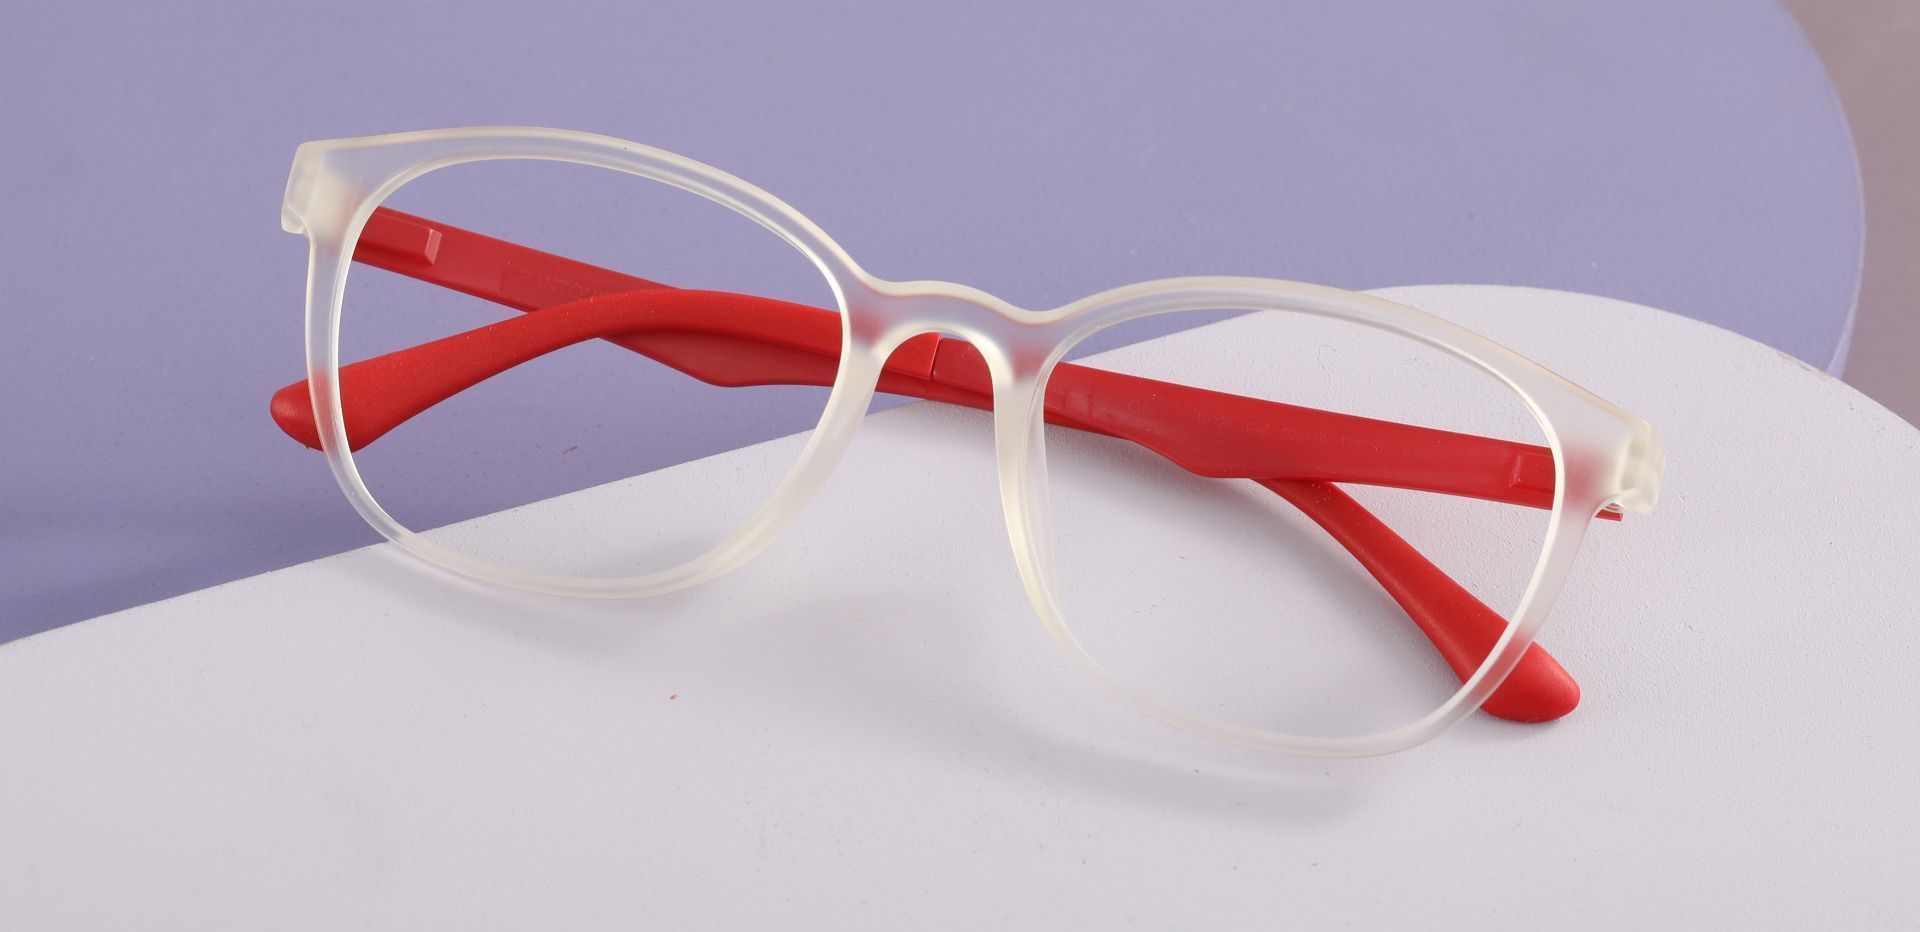 Ursula Oval Reading Glasses - Matte Clear